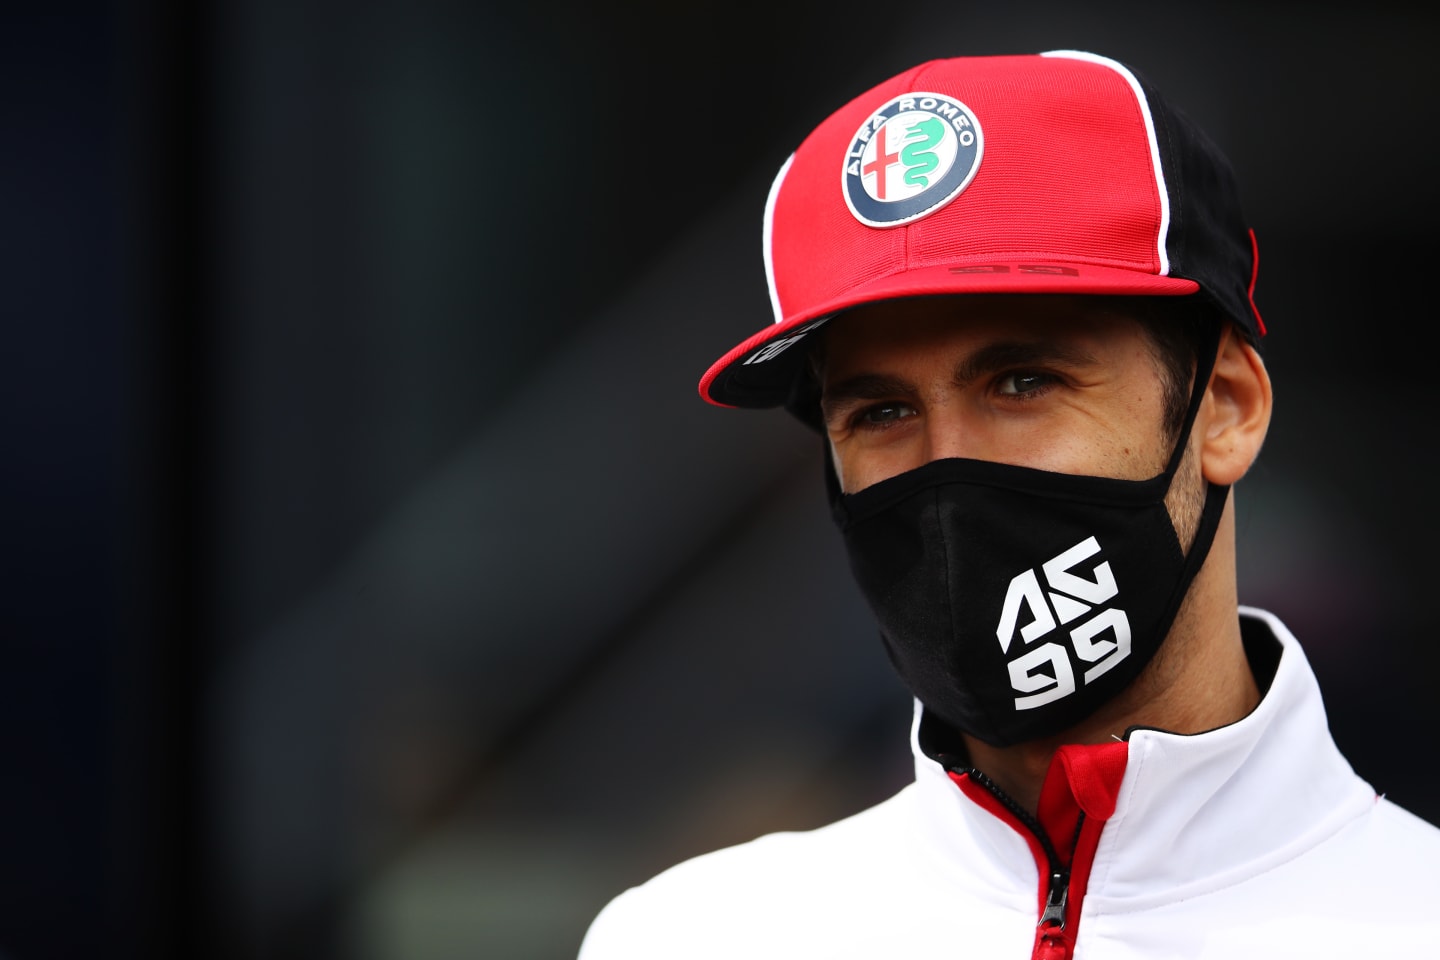 SPA, BELGIUM - AUGUST 27: Antonio Giovinazzi of Italy and Alfa Romeo Racing walks in the Paddock